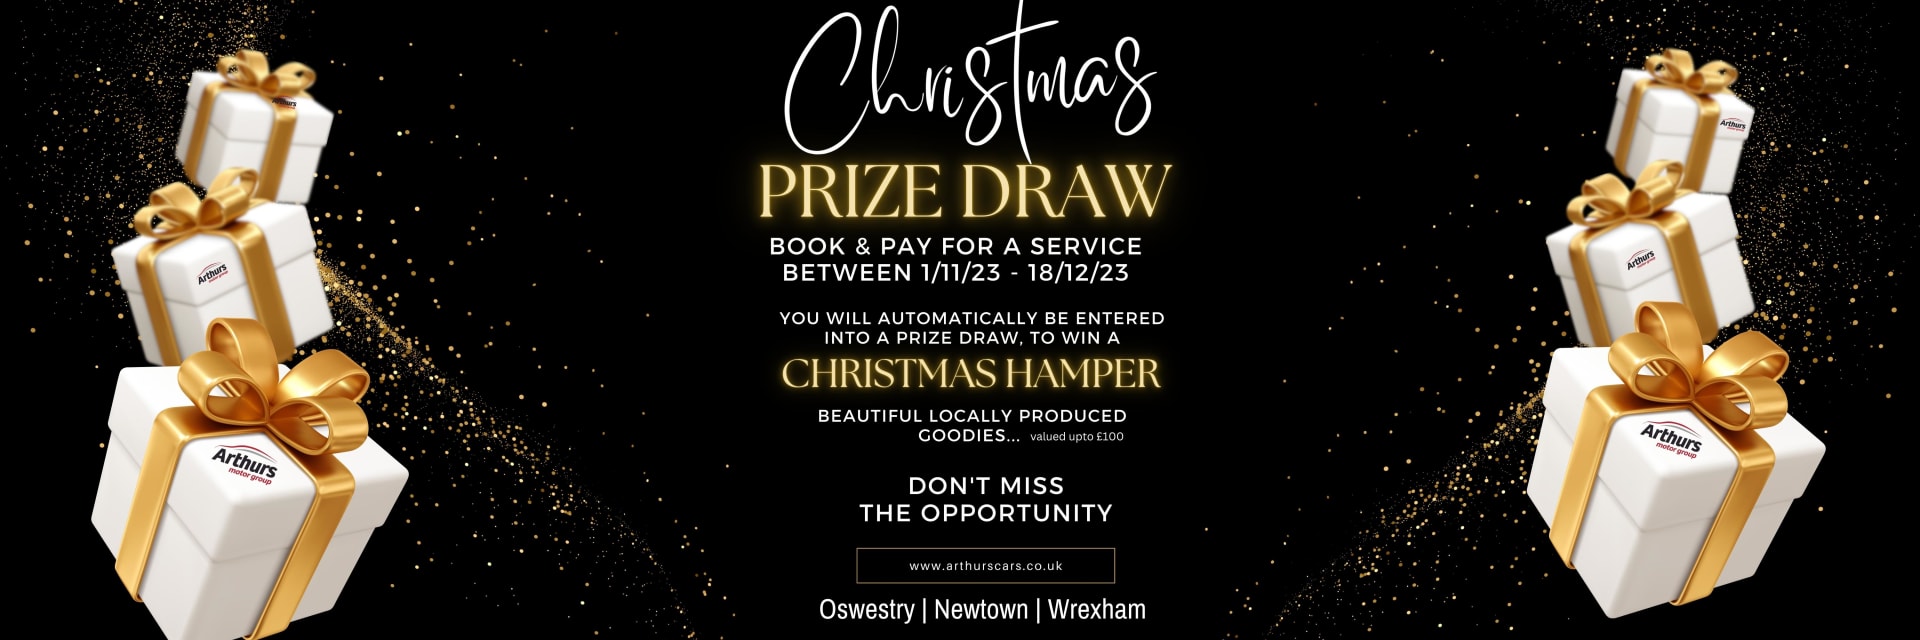 Christmas Hamper Prize Draw